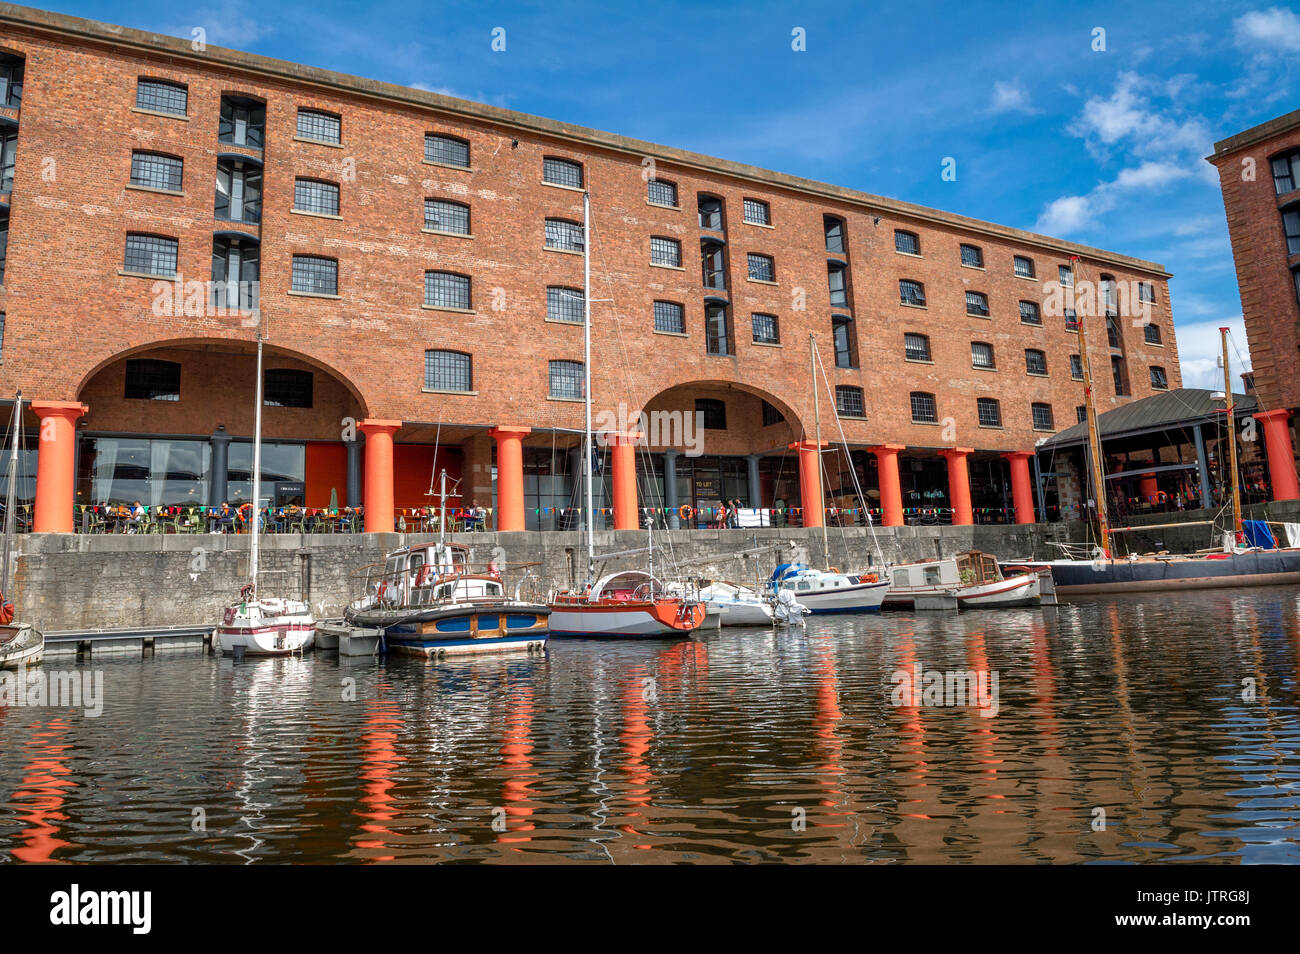 Historical Albert docks in Liverpool. Stock Photo